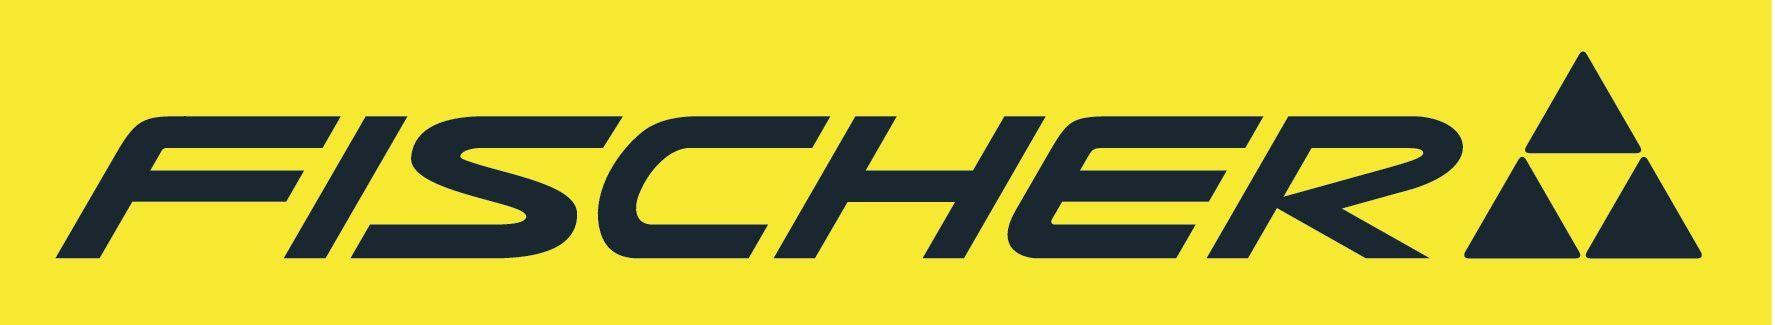 Fischer Logo - Fischer. Ski Brands & equipment logos. Skiing